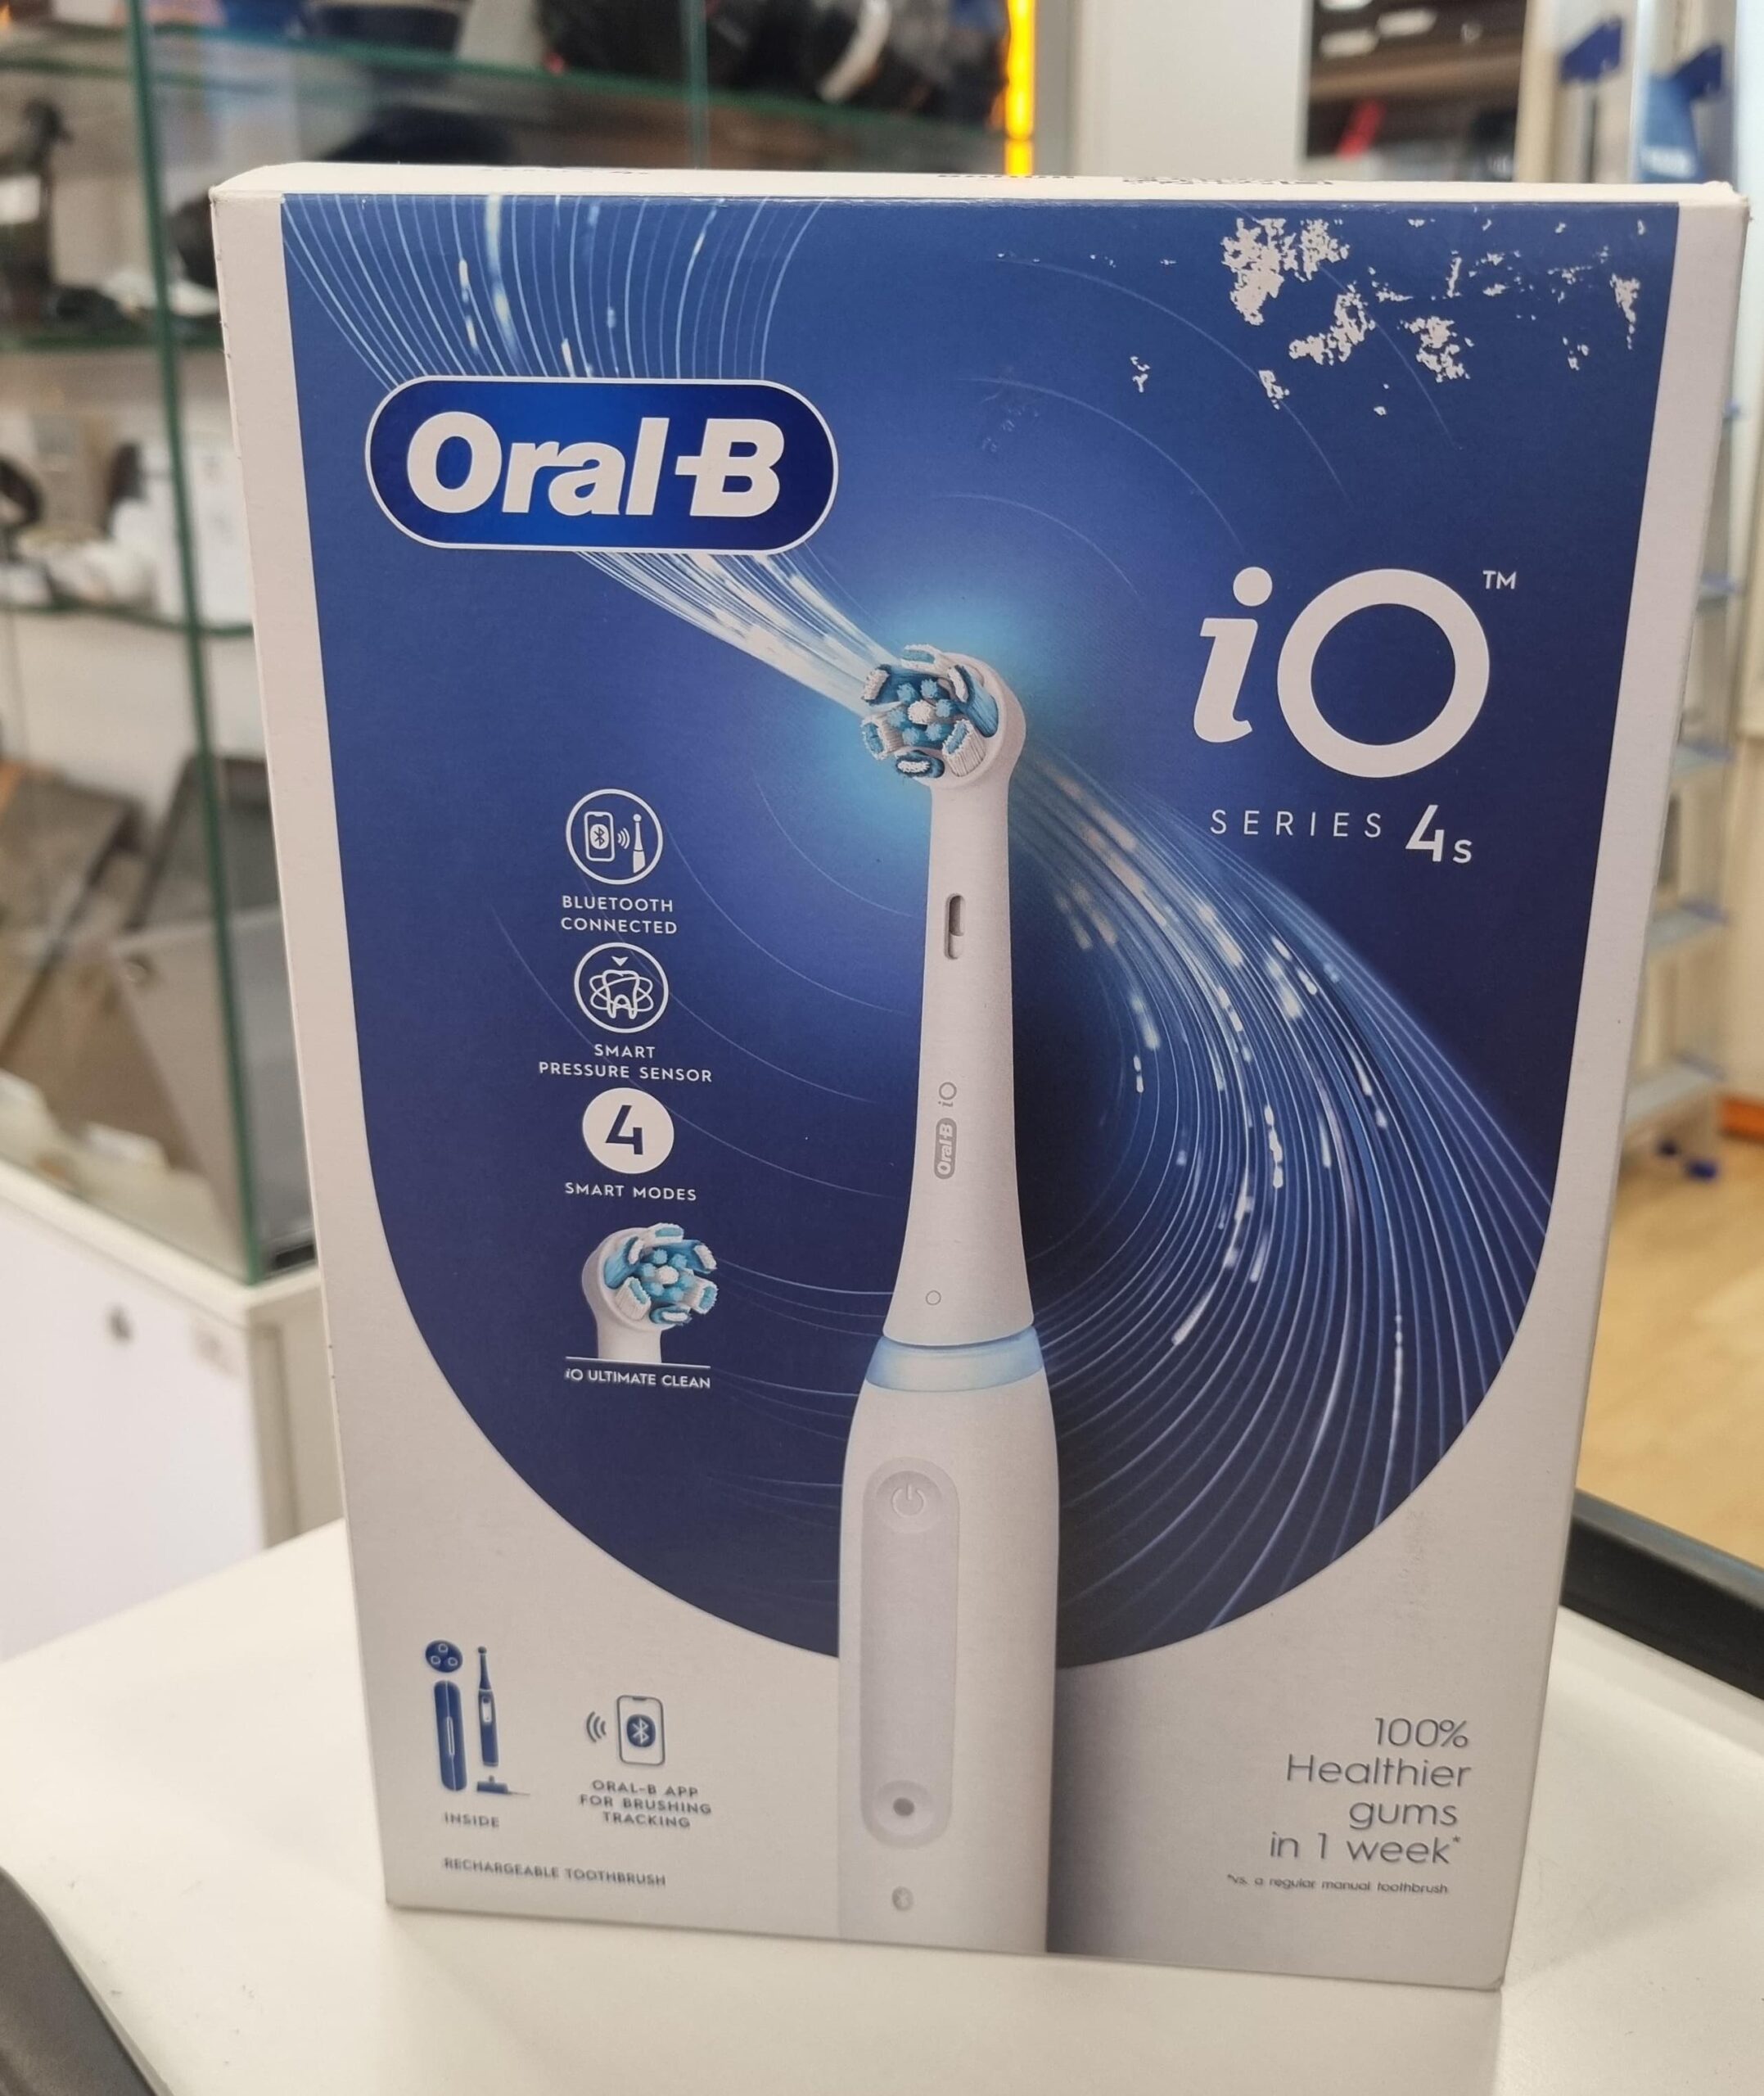 Oral B iO 5 Cepillo Eléctrico